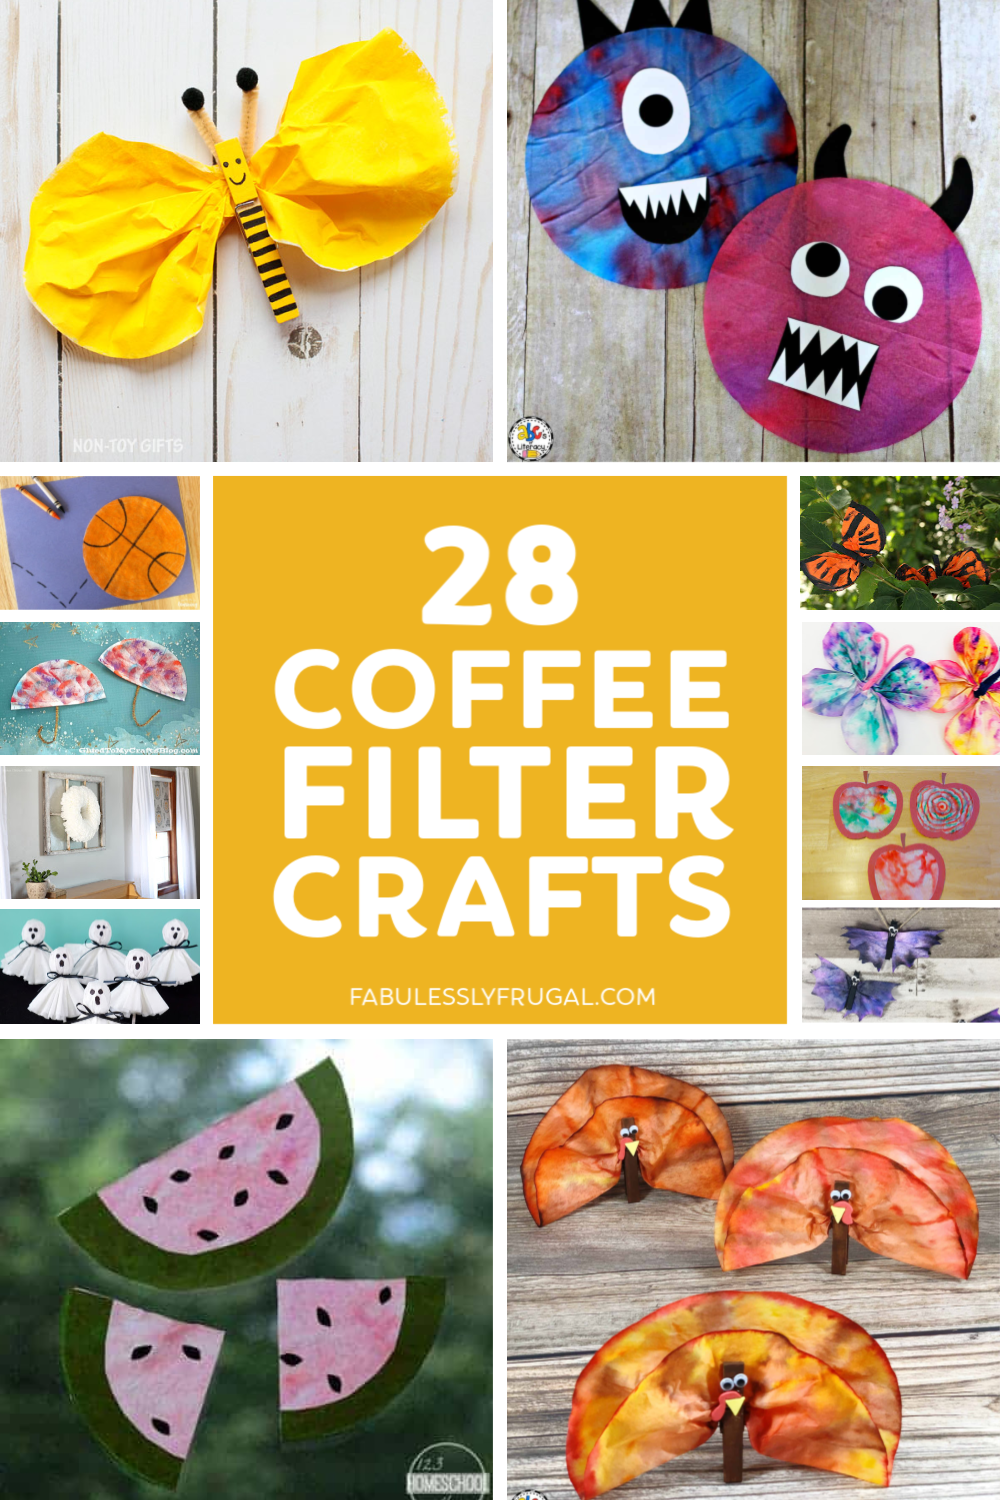 Coffee filter crafts